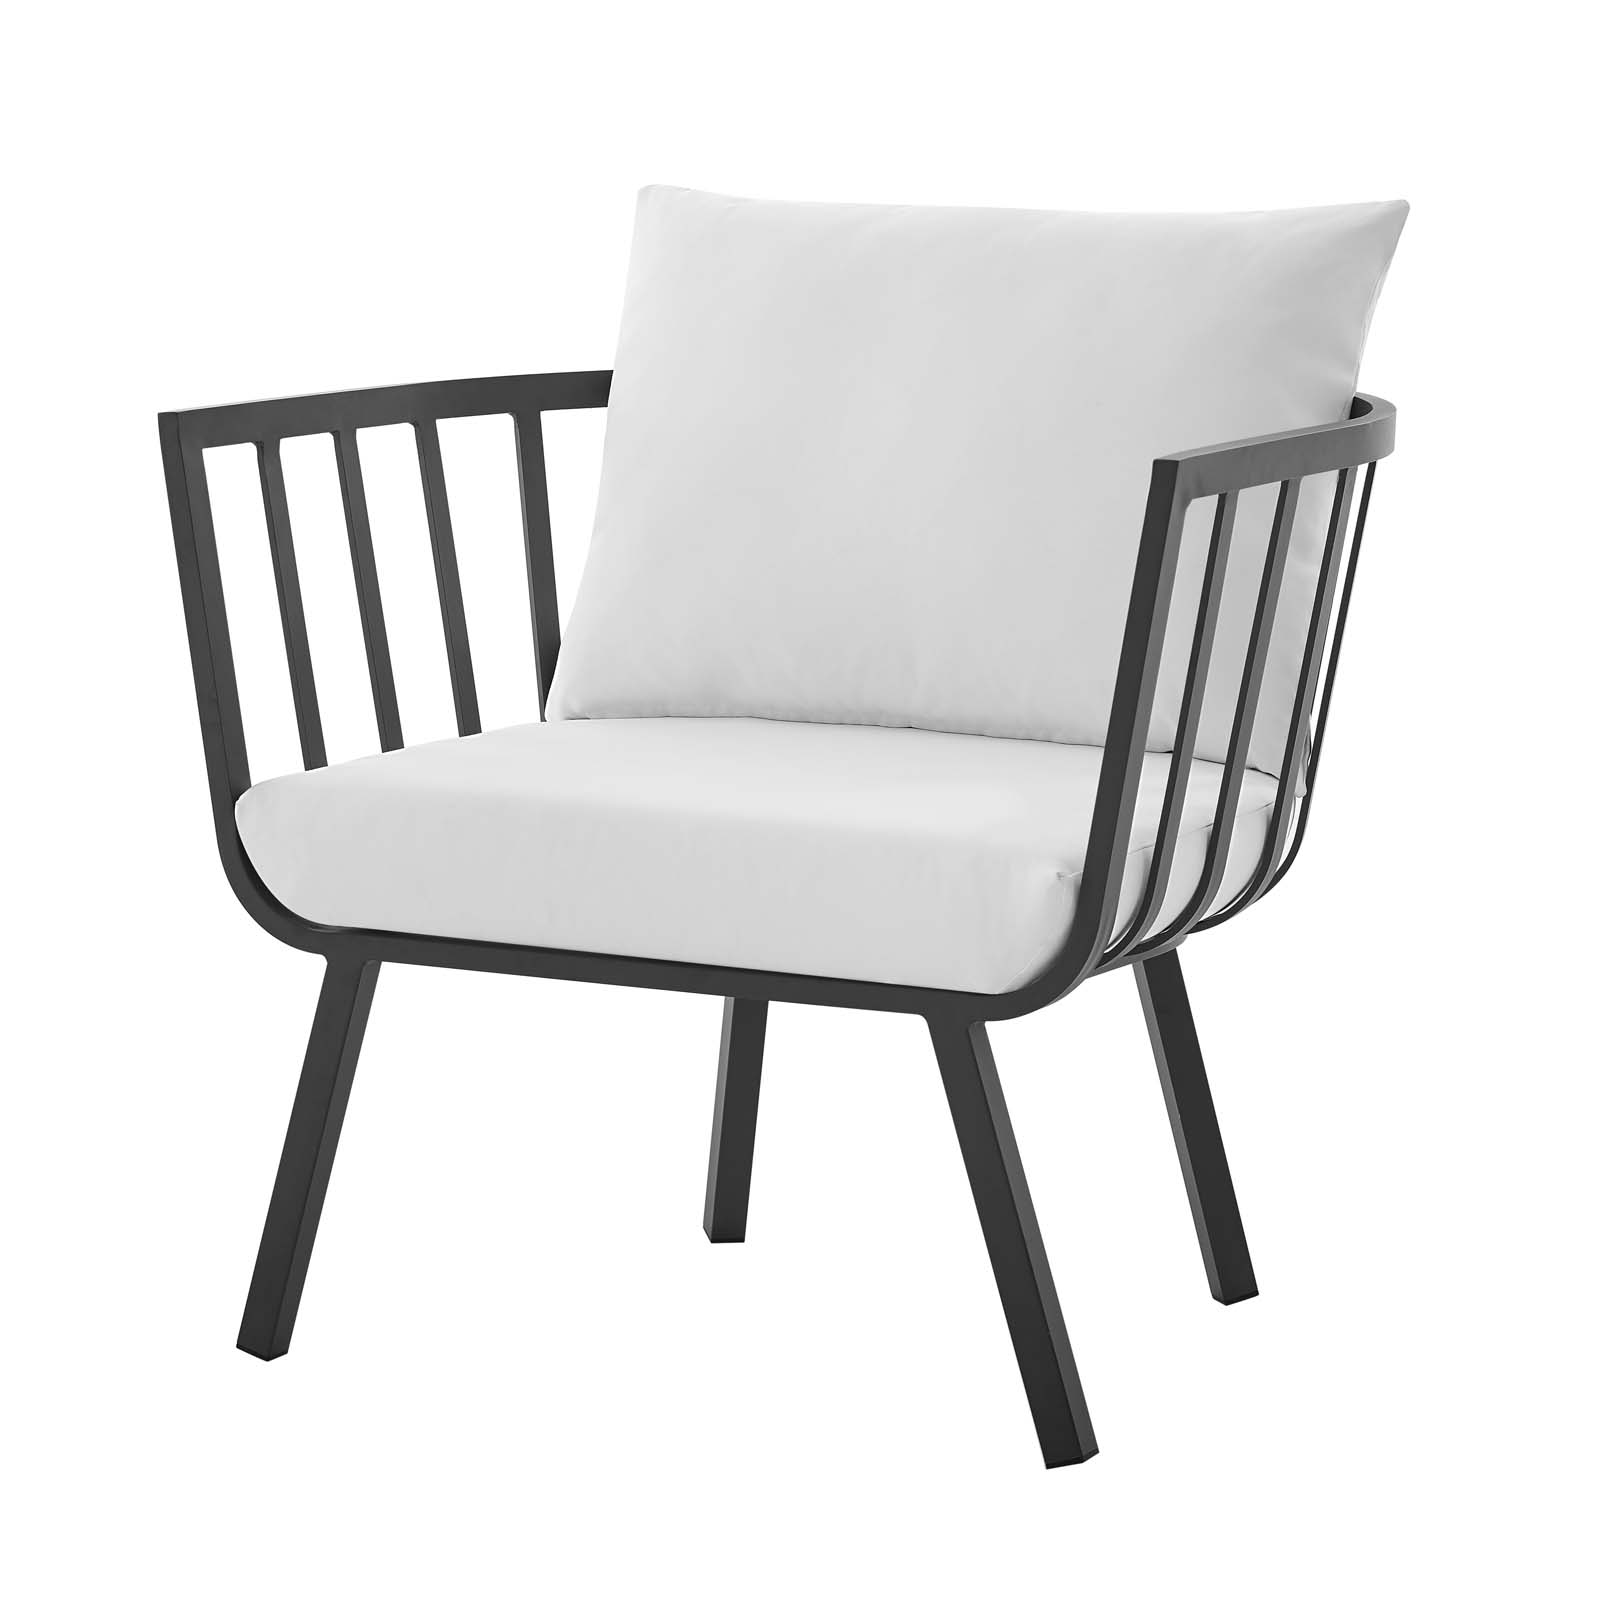 Contemporary Modern Urban Designer Outdoor Patio Balcony Garden Furniture Armchair Lounge Chair, Aluminum Fabric, Grey Gray White - image 1 of 6